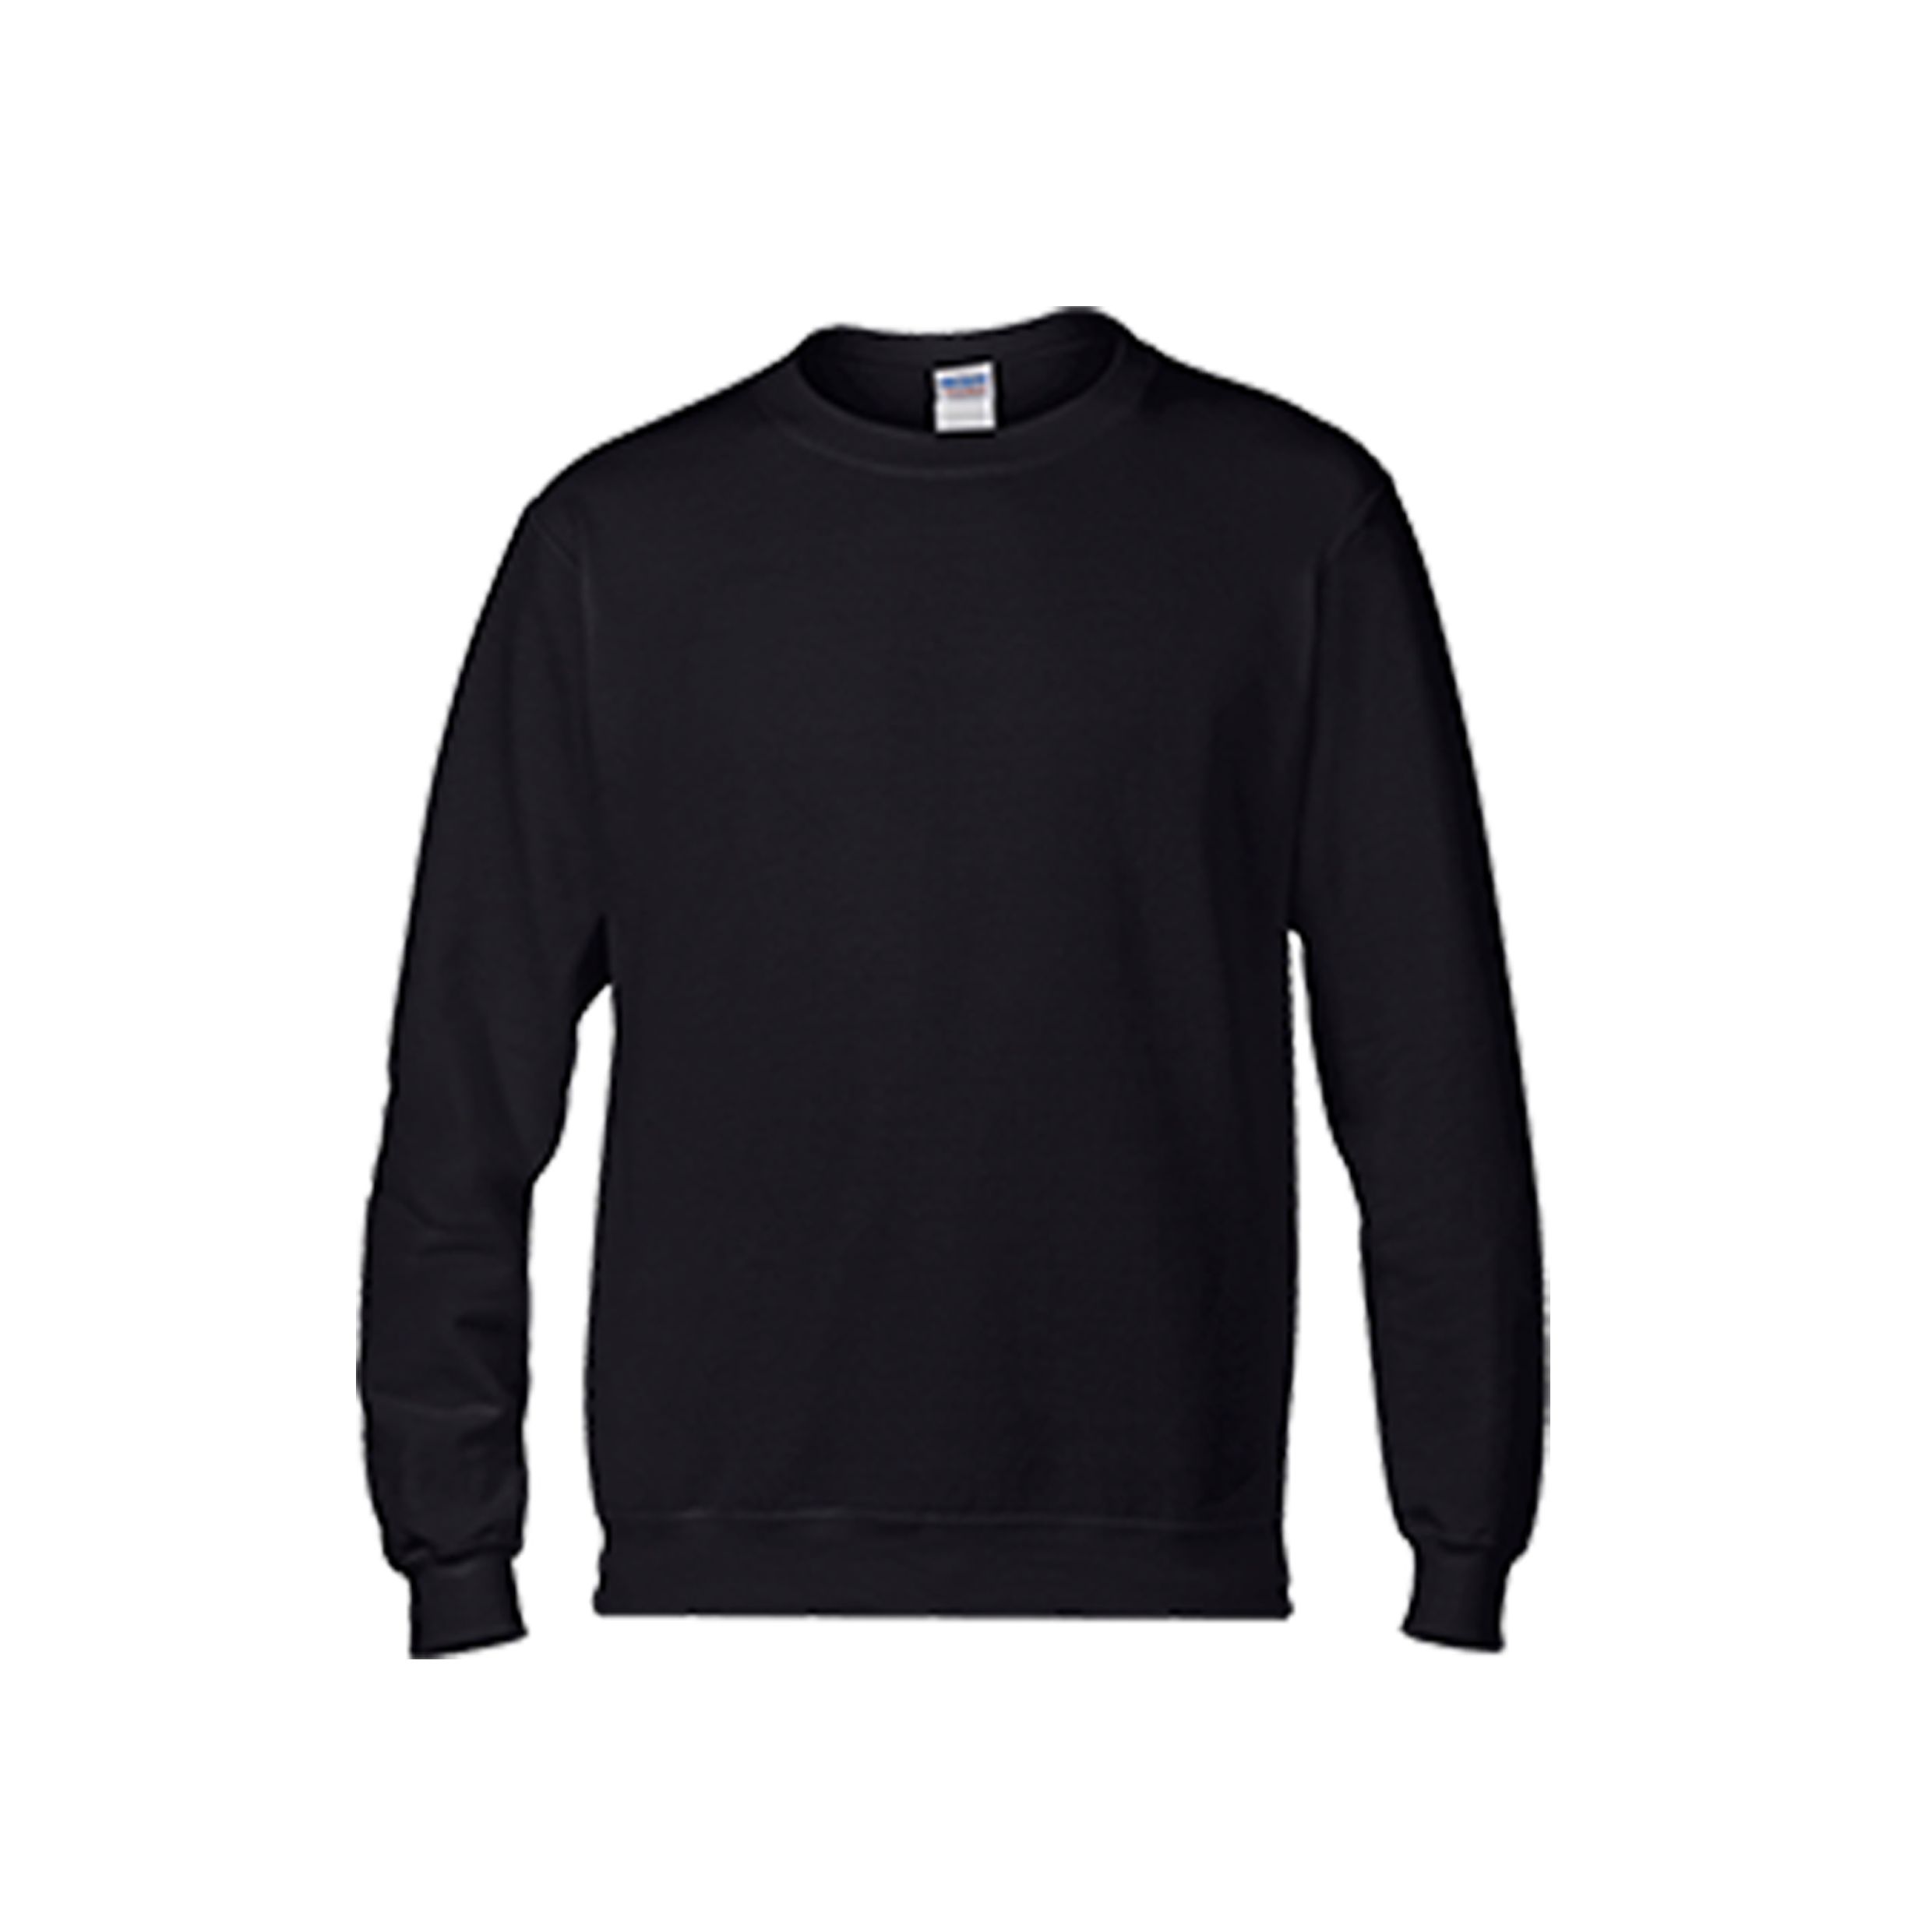 Gildan Sweatshirt Png Newest Product For Women